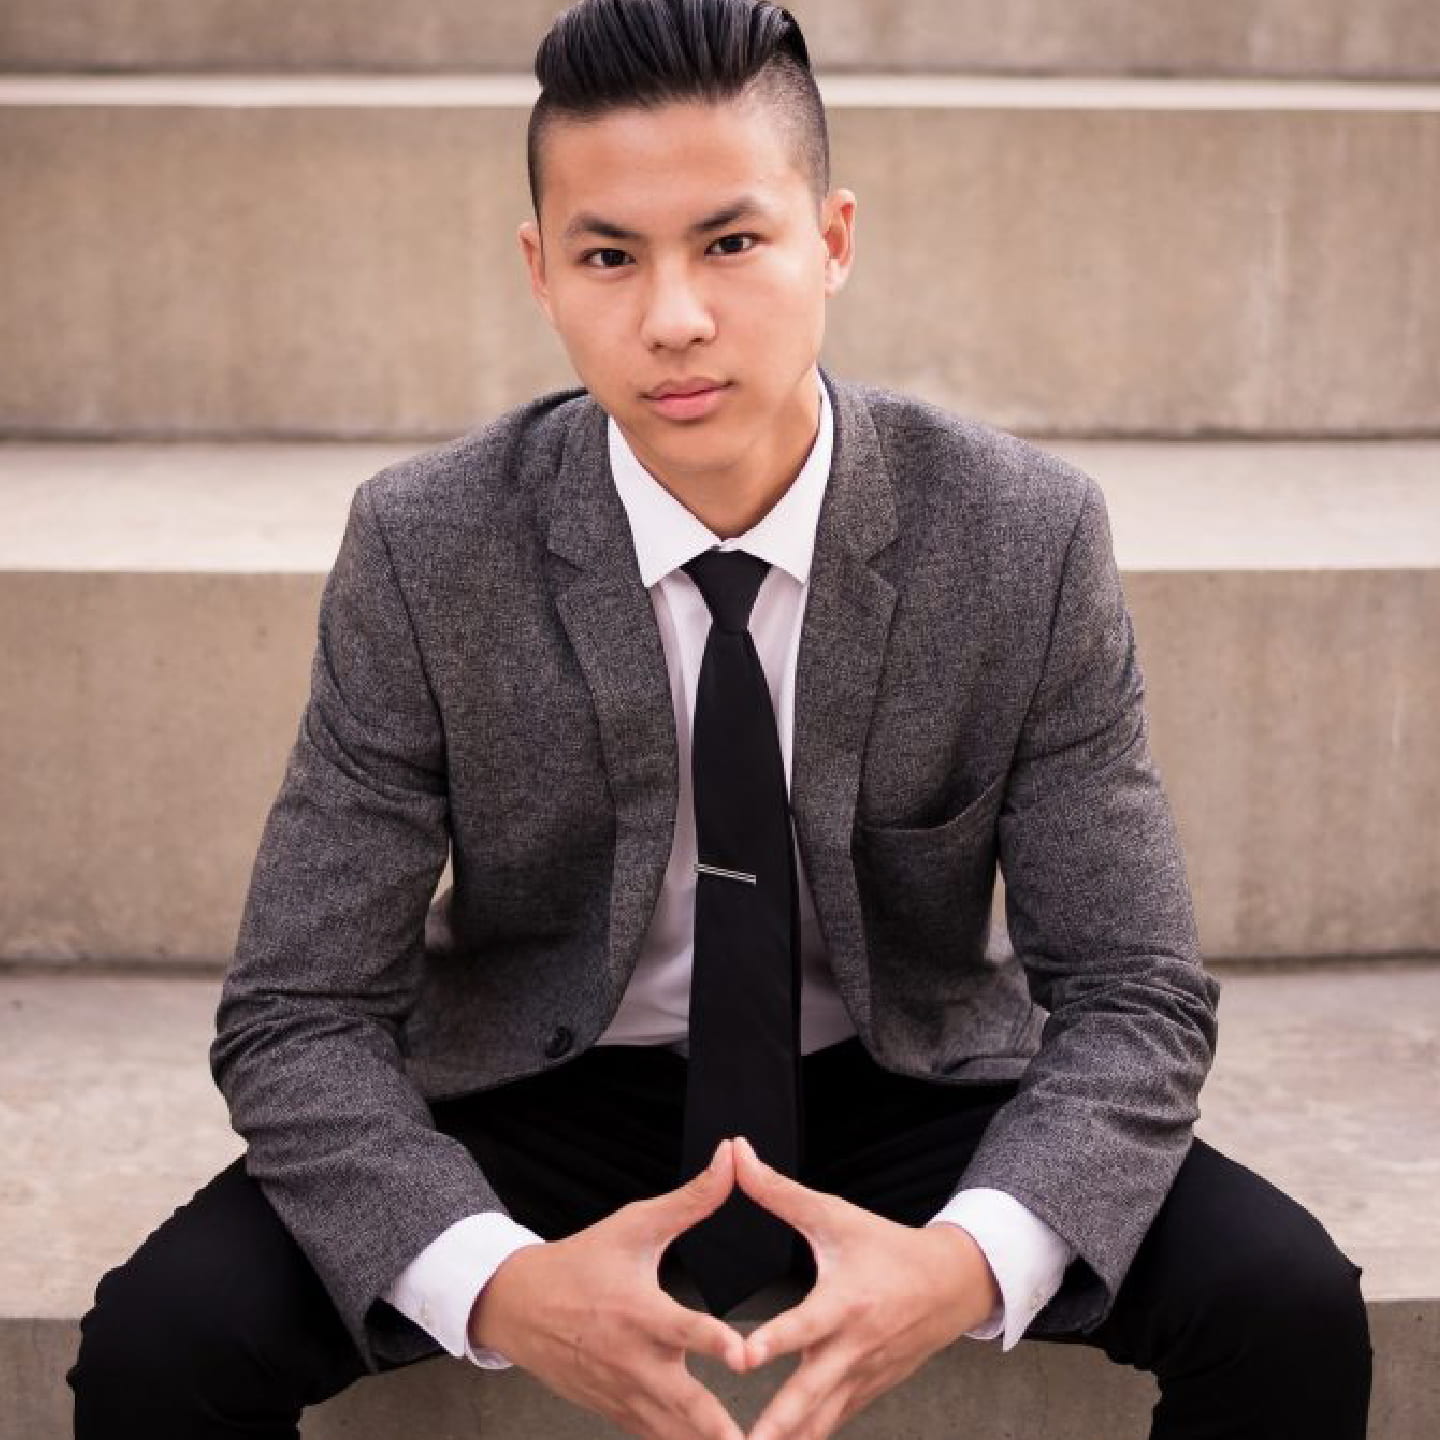 Kevin Li wears a gray blazer and black tie while sitting on concrete steps